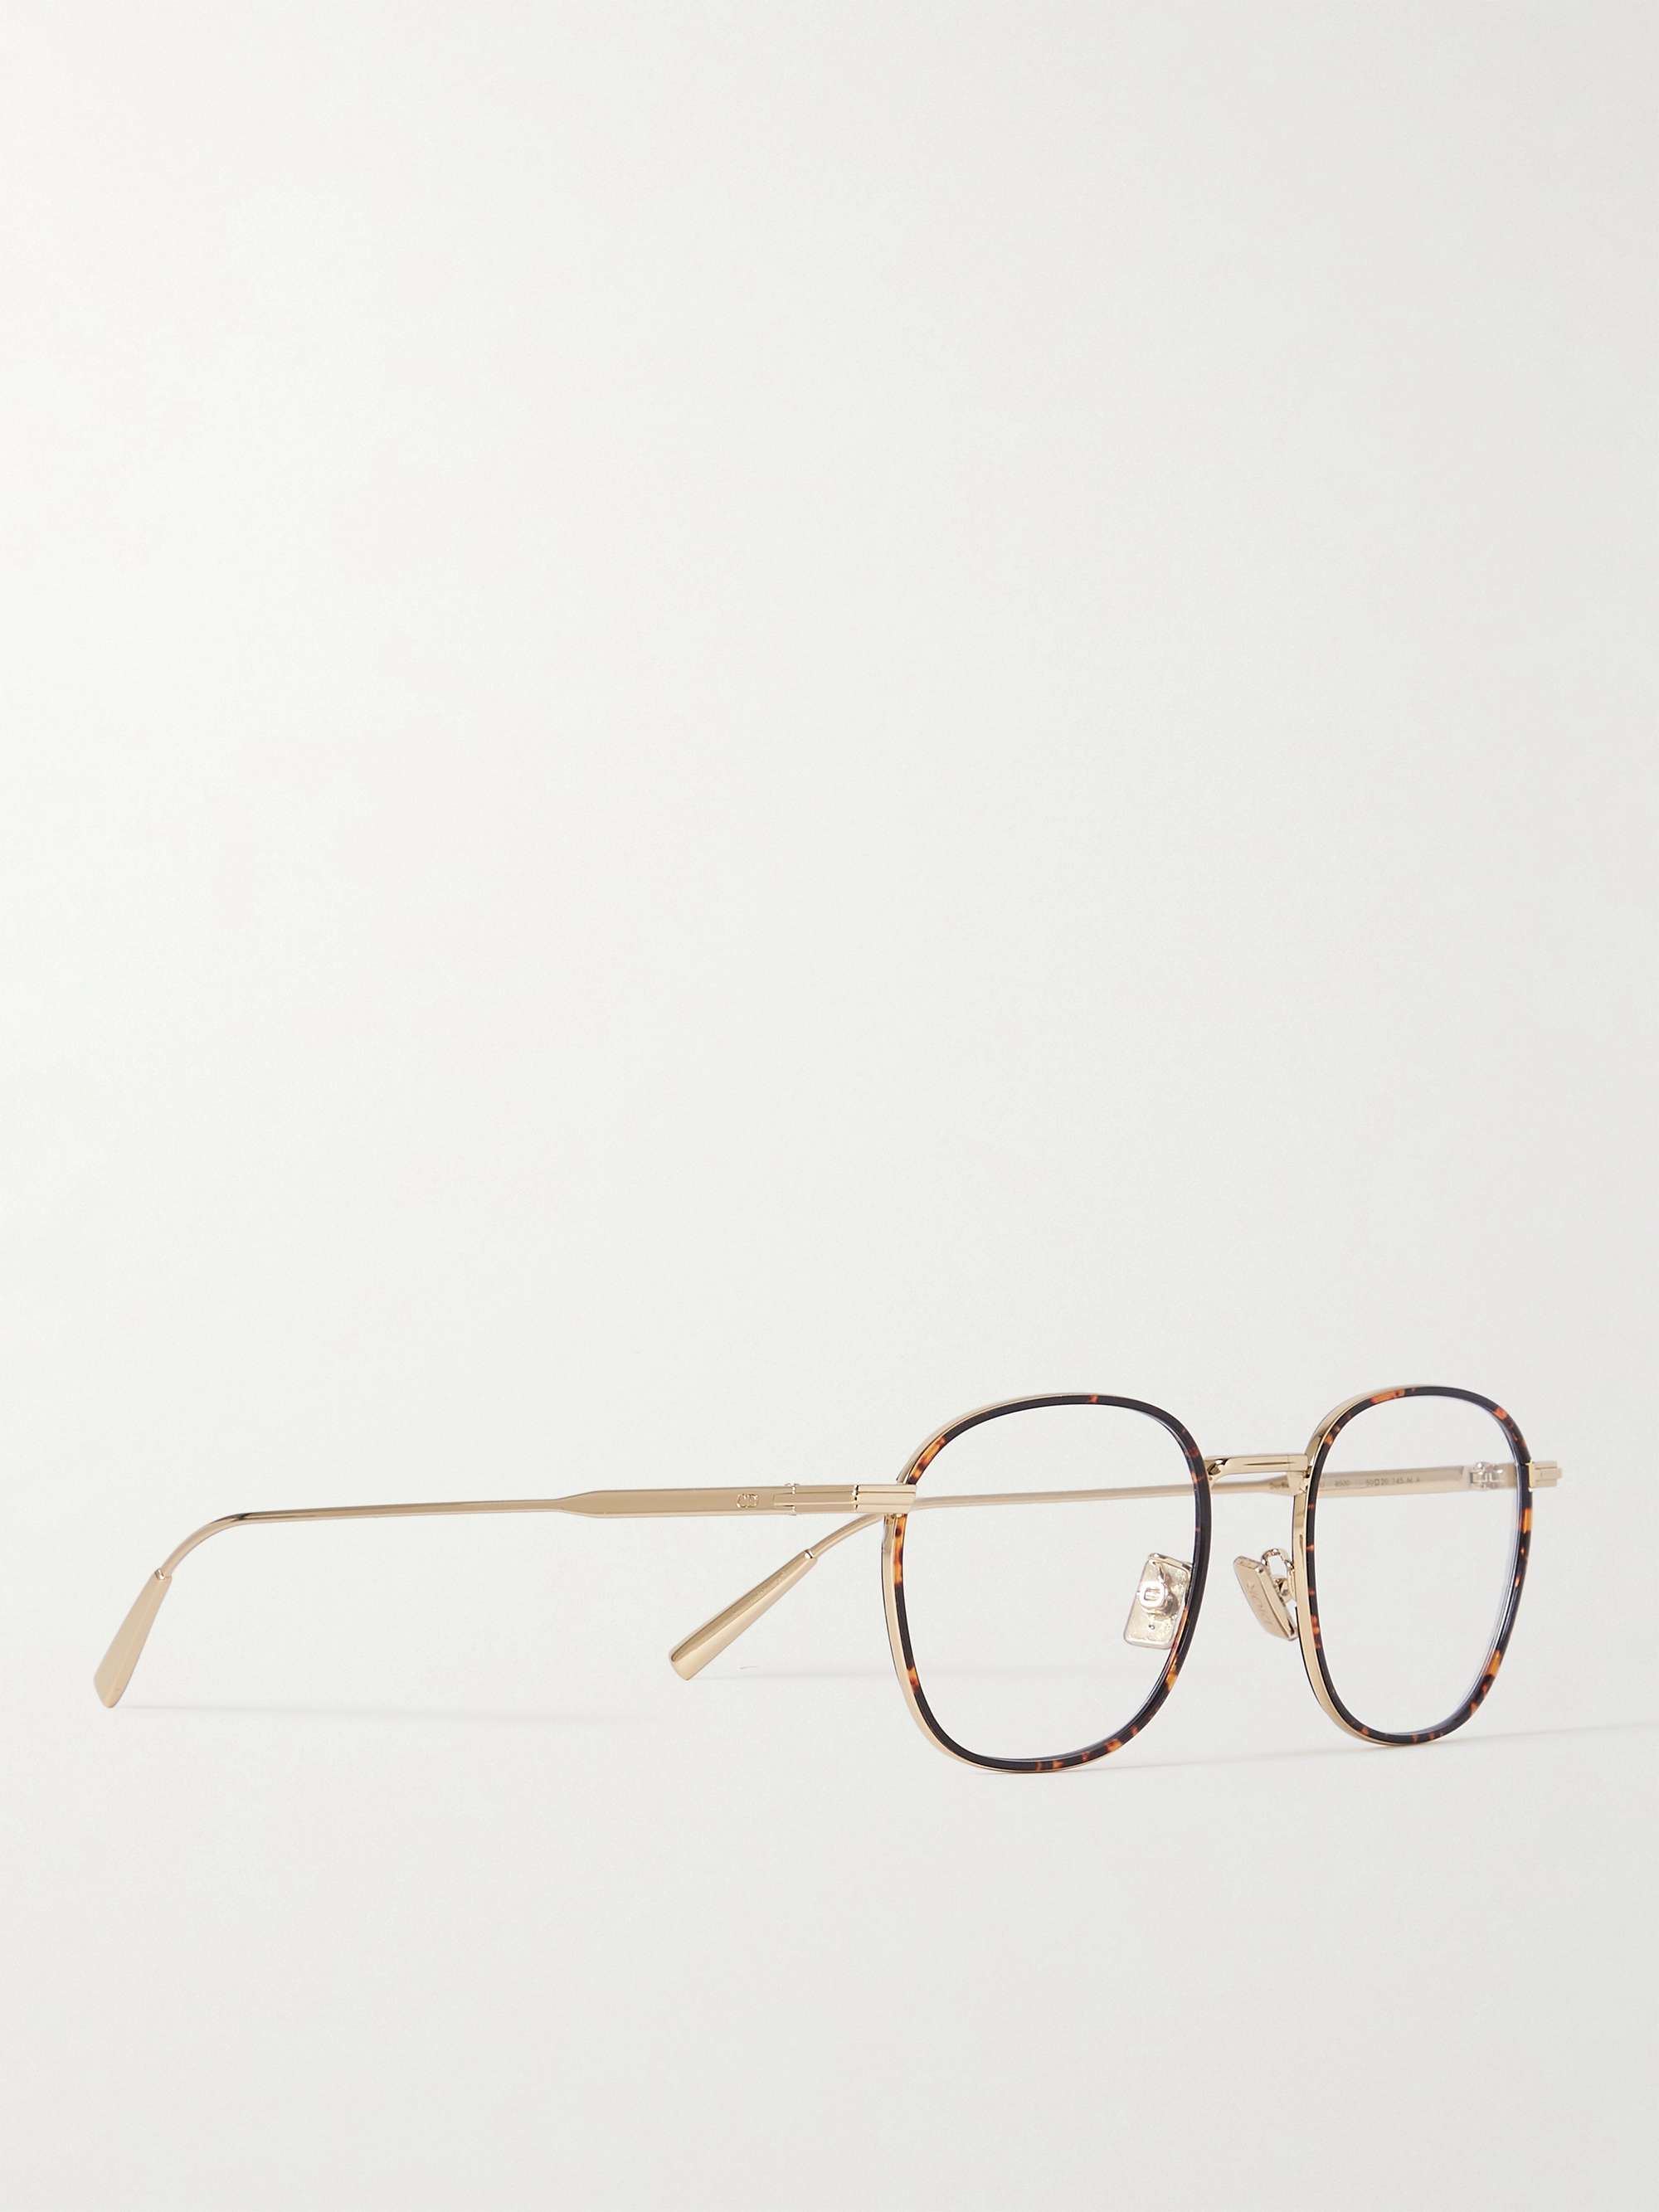 DIOR EYEWEAR DiorBlackSuit S2U Round-Frame Tortoiseshell Acetate and Gold-Tone Optical Glasses